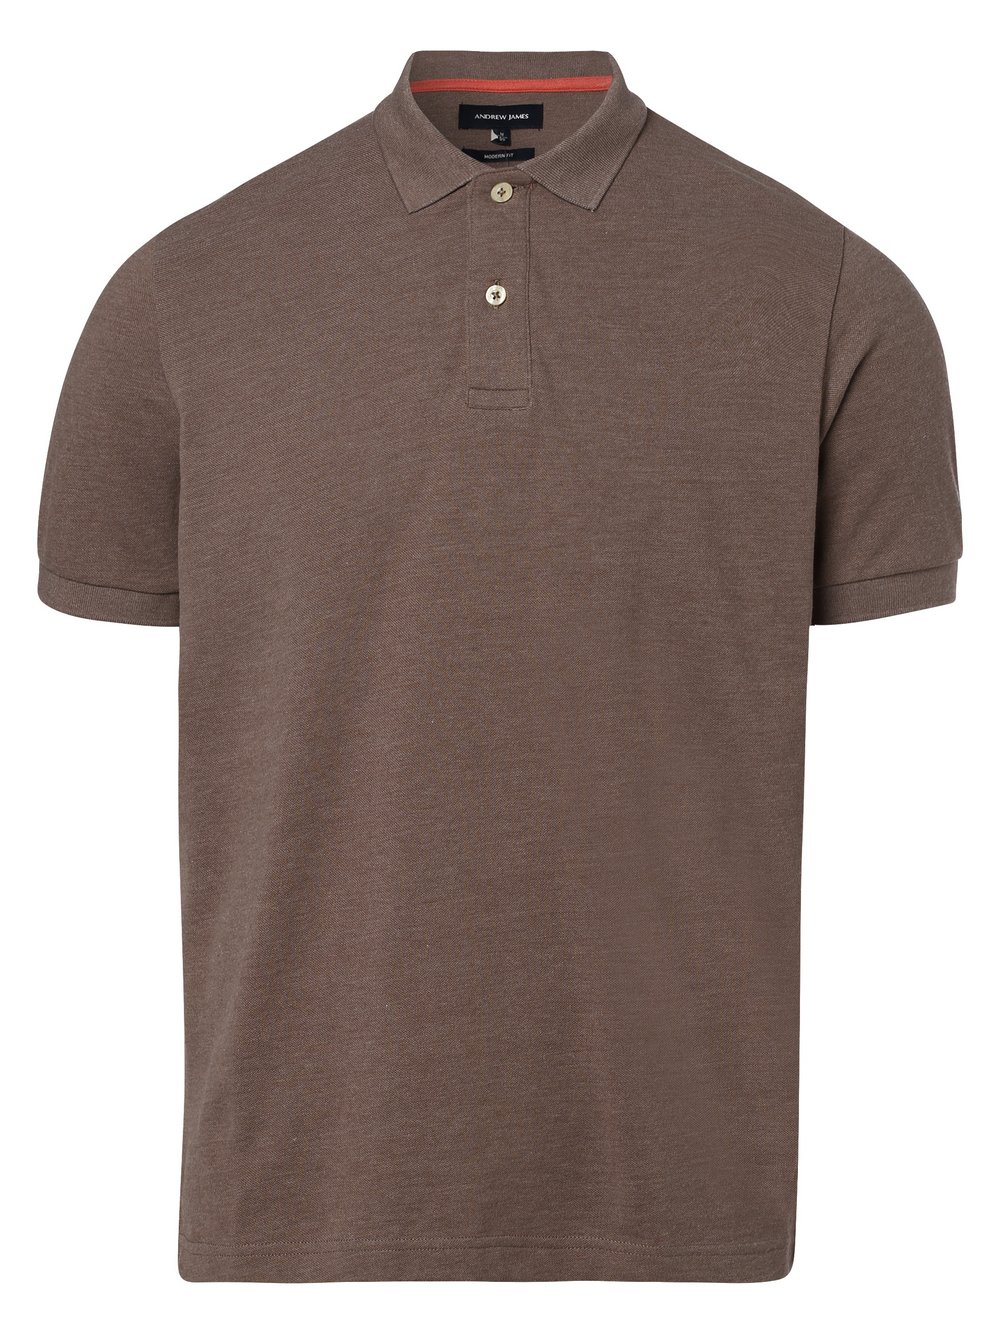 Andrew James - Męska koszulka polo, brązowy